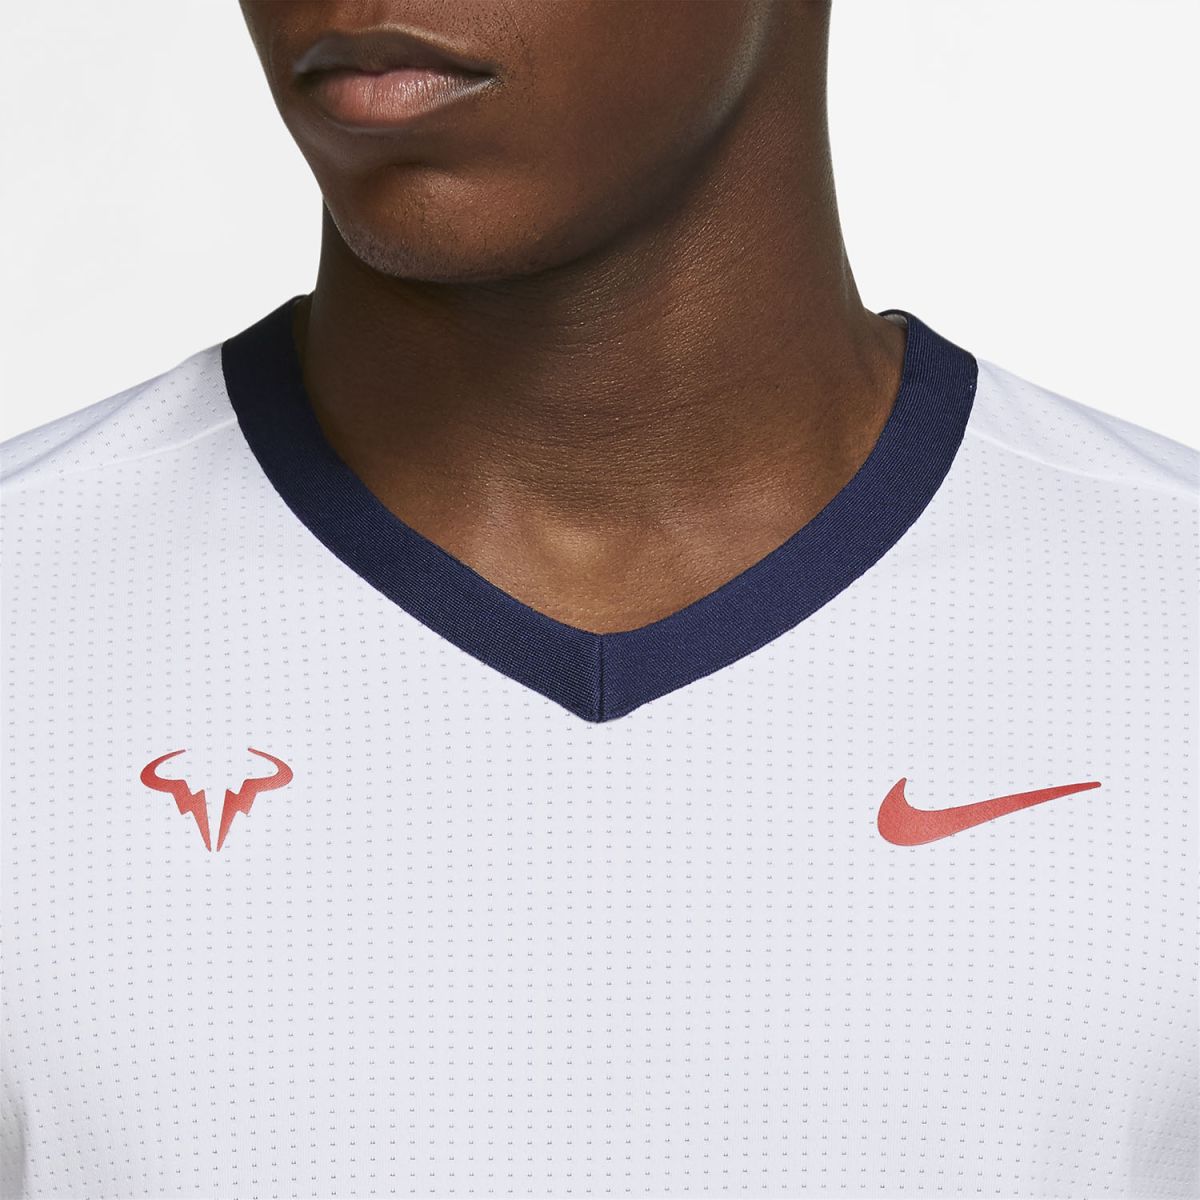 NikeCourt Dri-FIT ADV Rafa Men's Short-Sleeve Tennis Top CV2